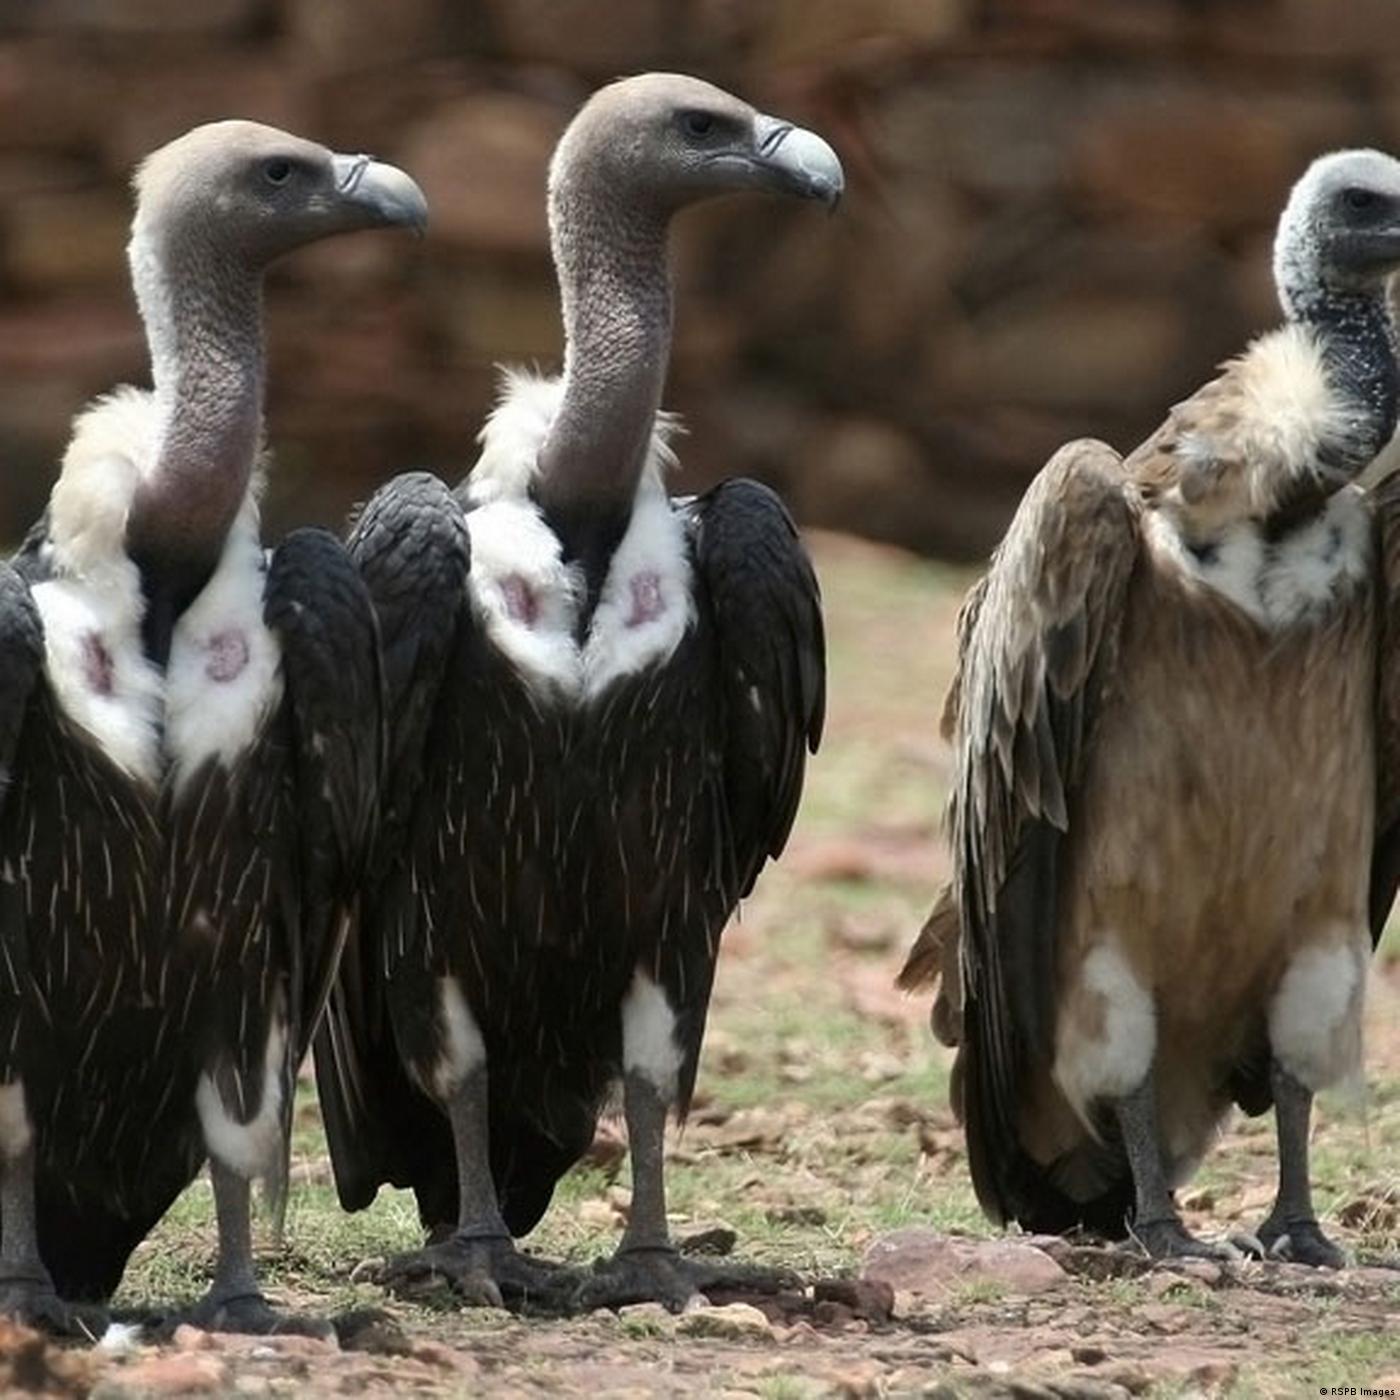 Spain: Deadly Danger for Europe's Vultures